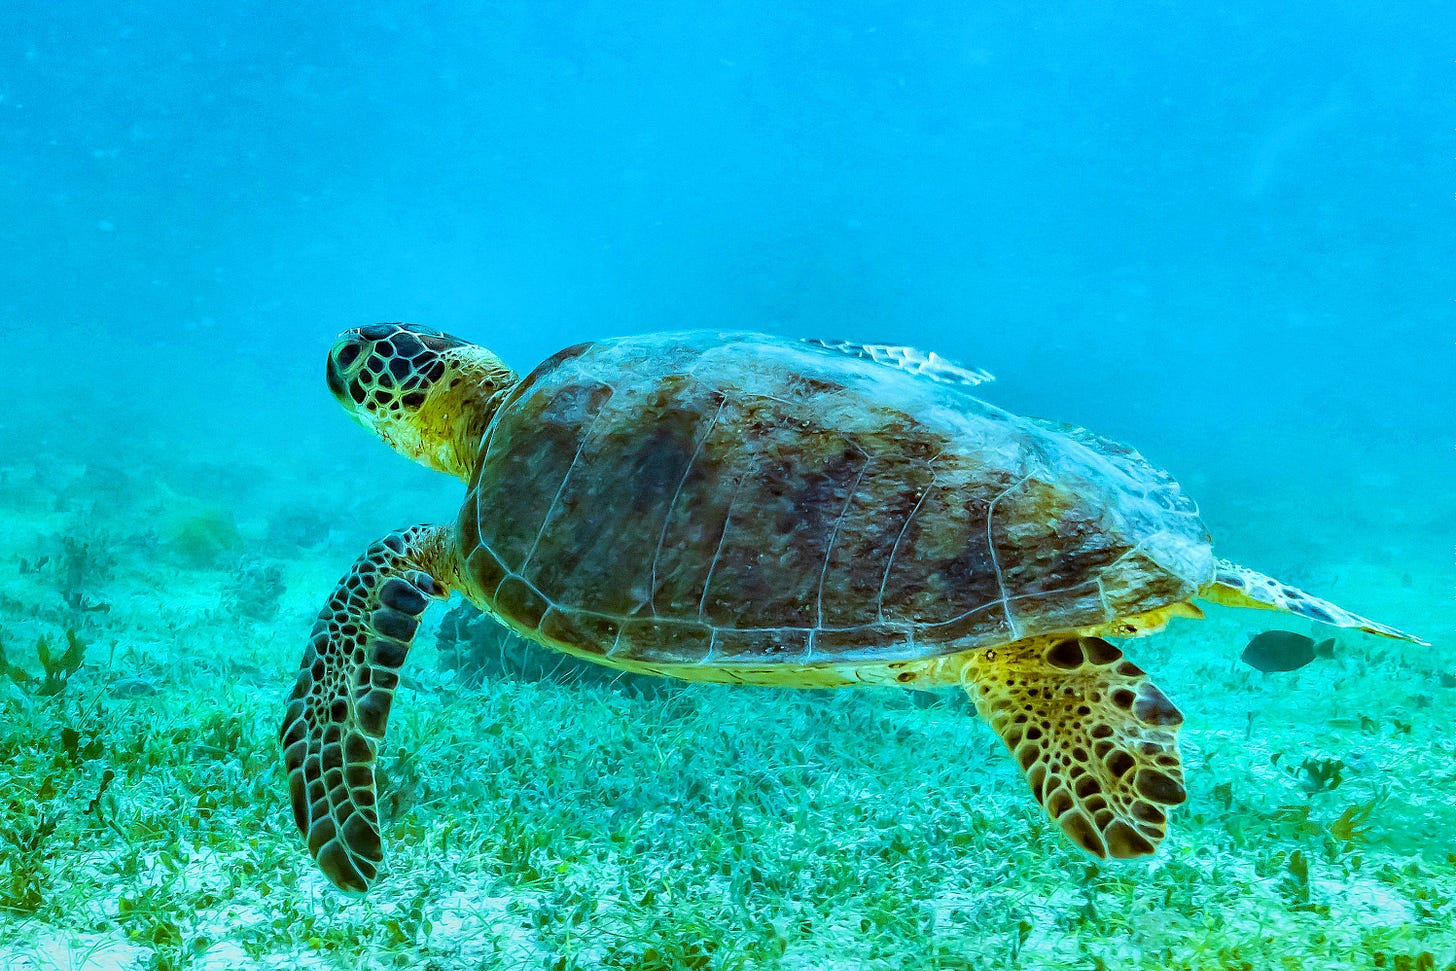 File:Green Sea Turtle swimming.jpg - Wikimedia Commons